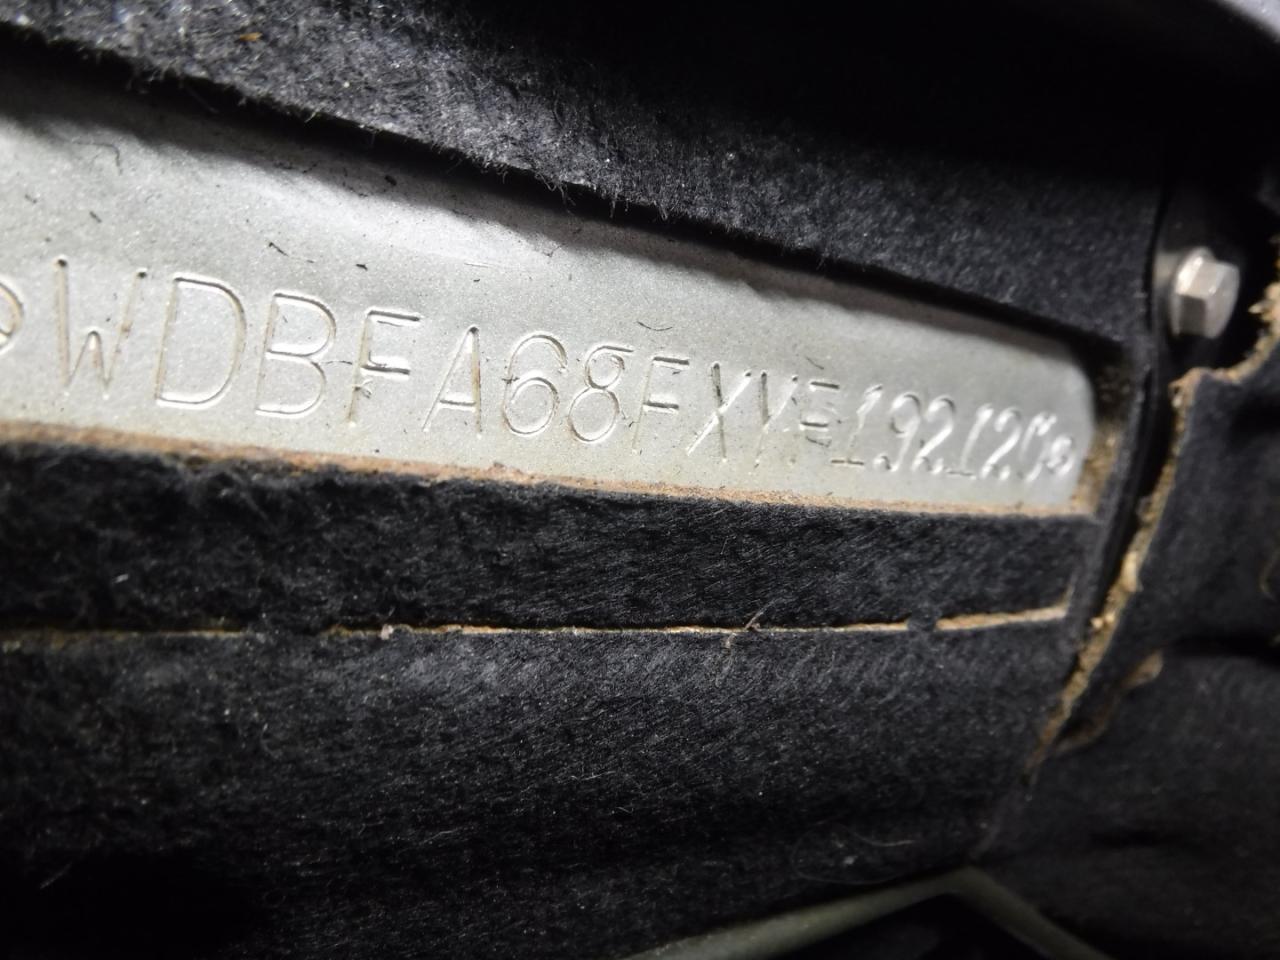 2000 Mercedes - Benz 500SL silver  192120